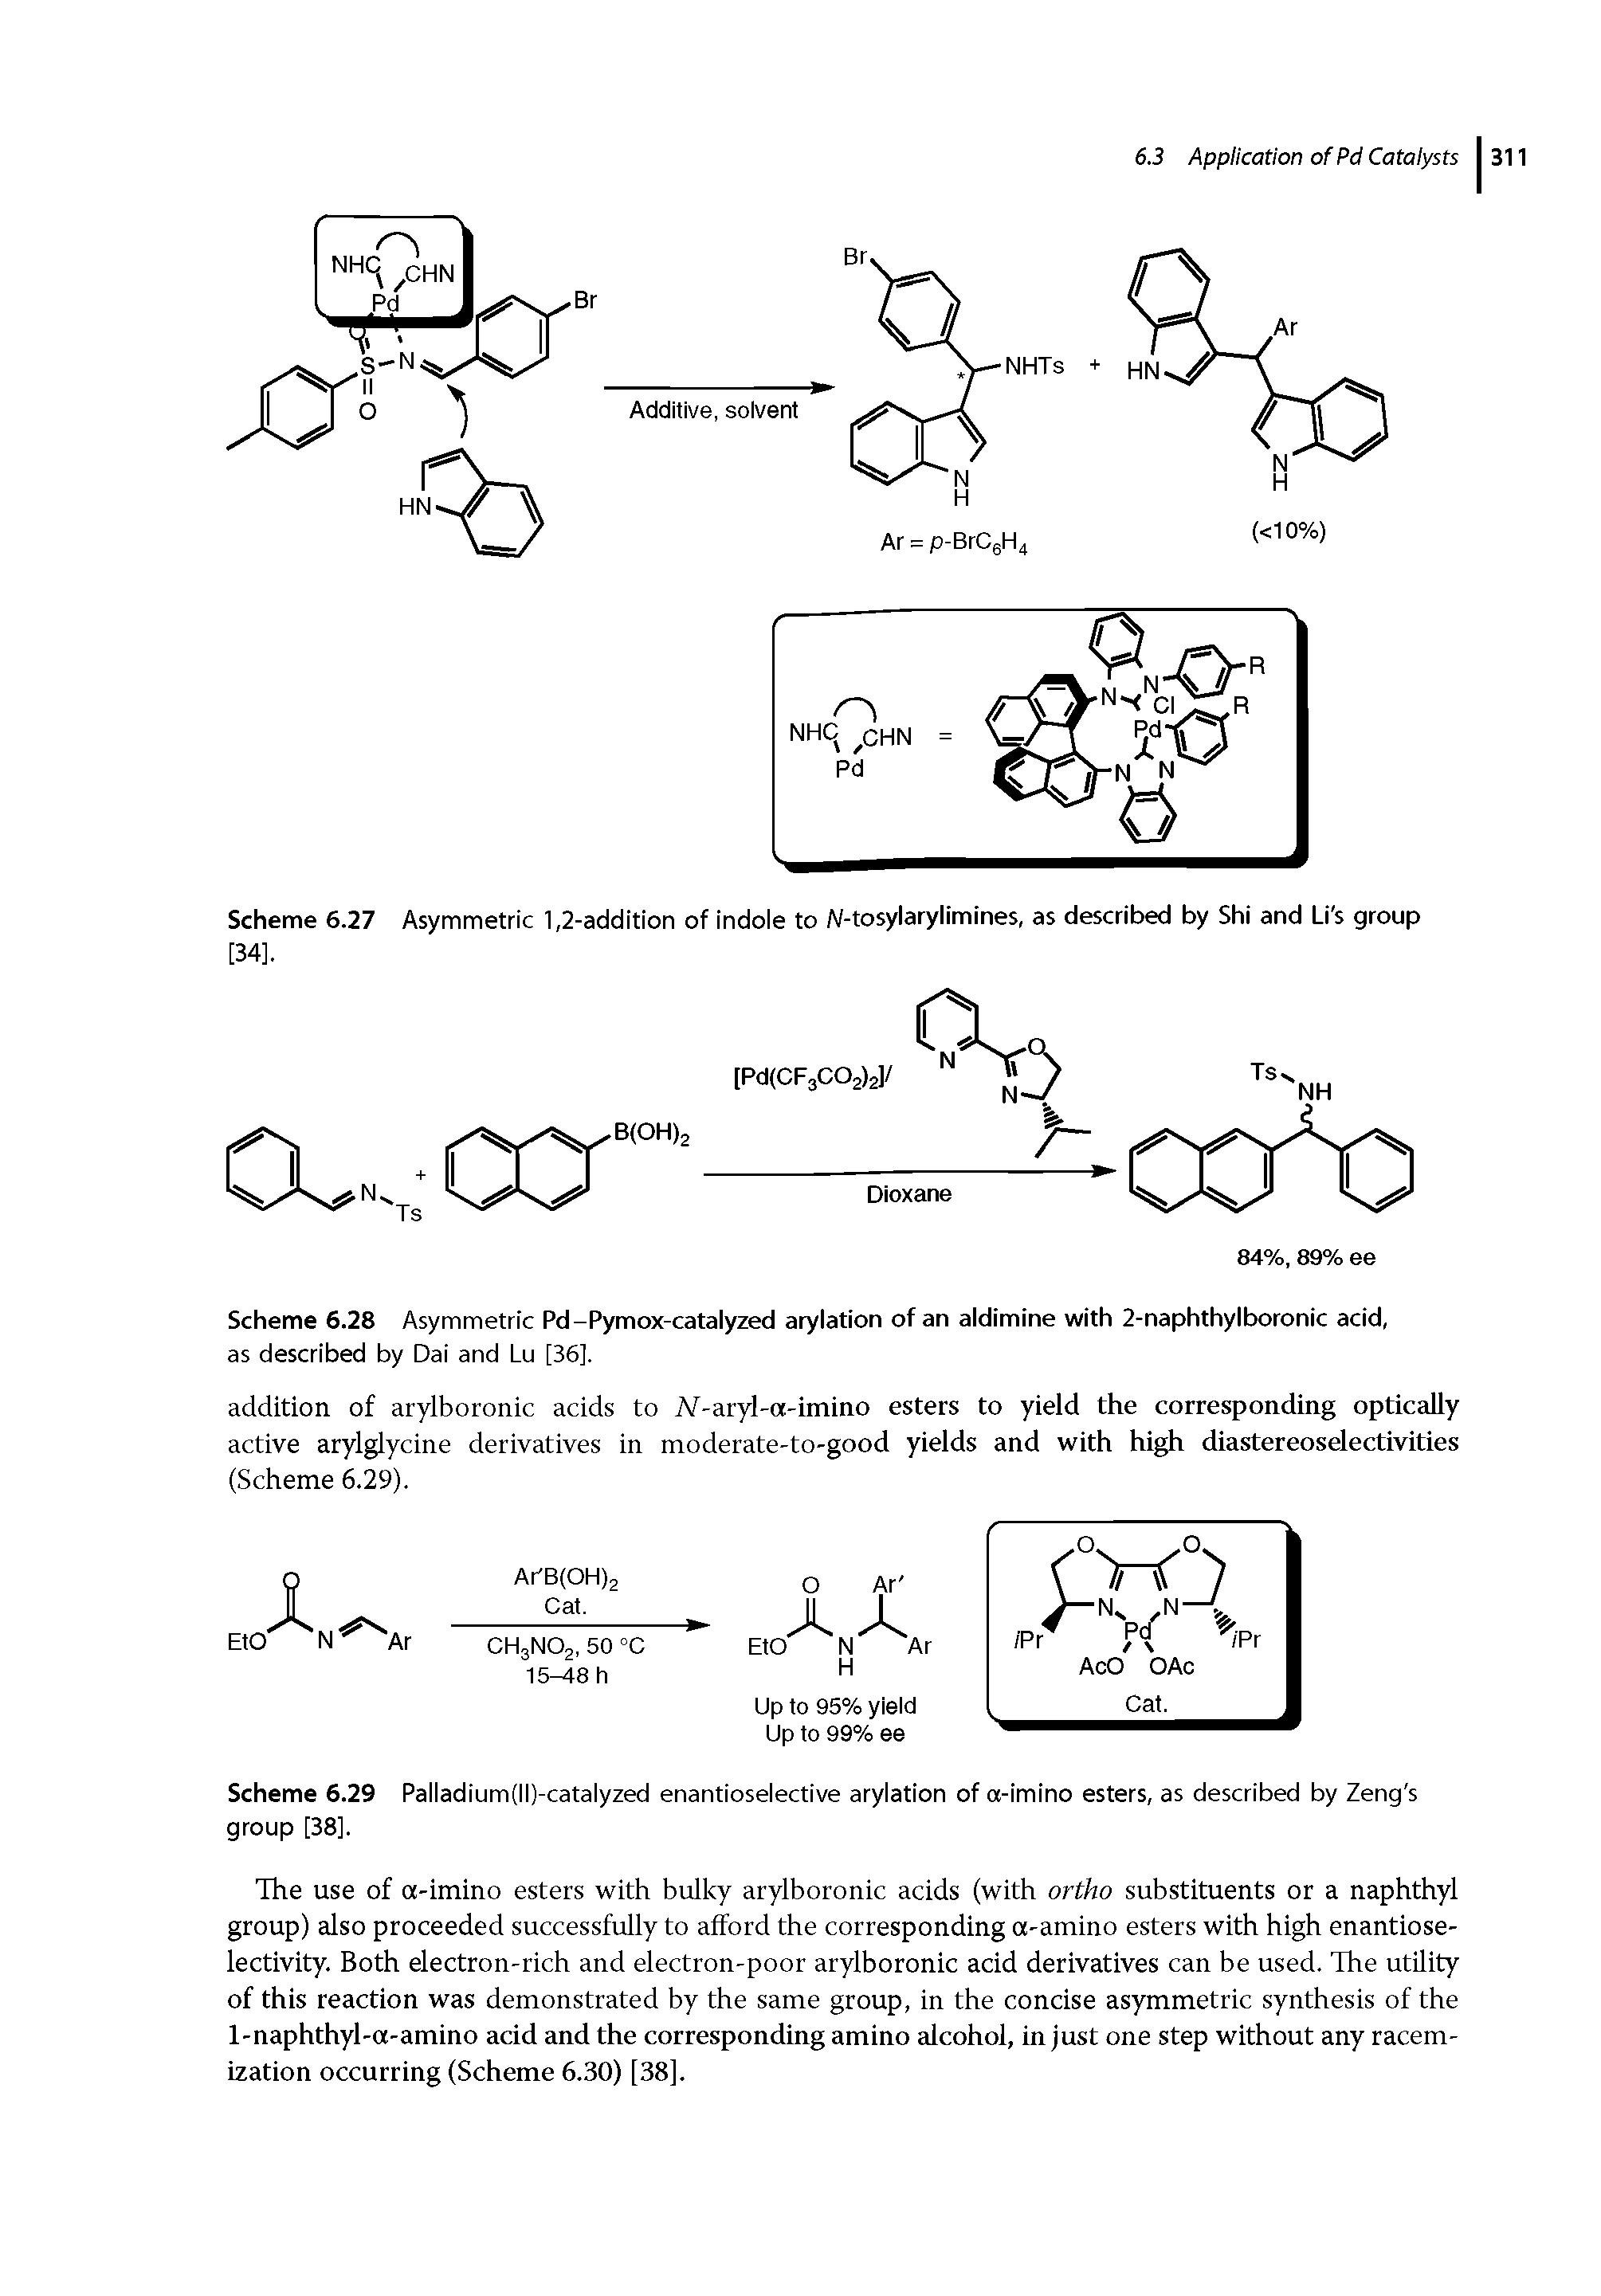 Scheme 6.28 Asymmetric Pd-Pymox-catalyzed arylation of an aldimine with 2-naphthylboronic acid,...